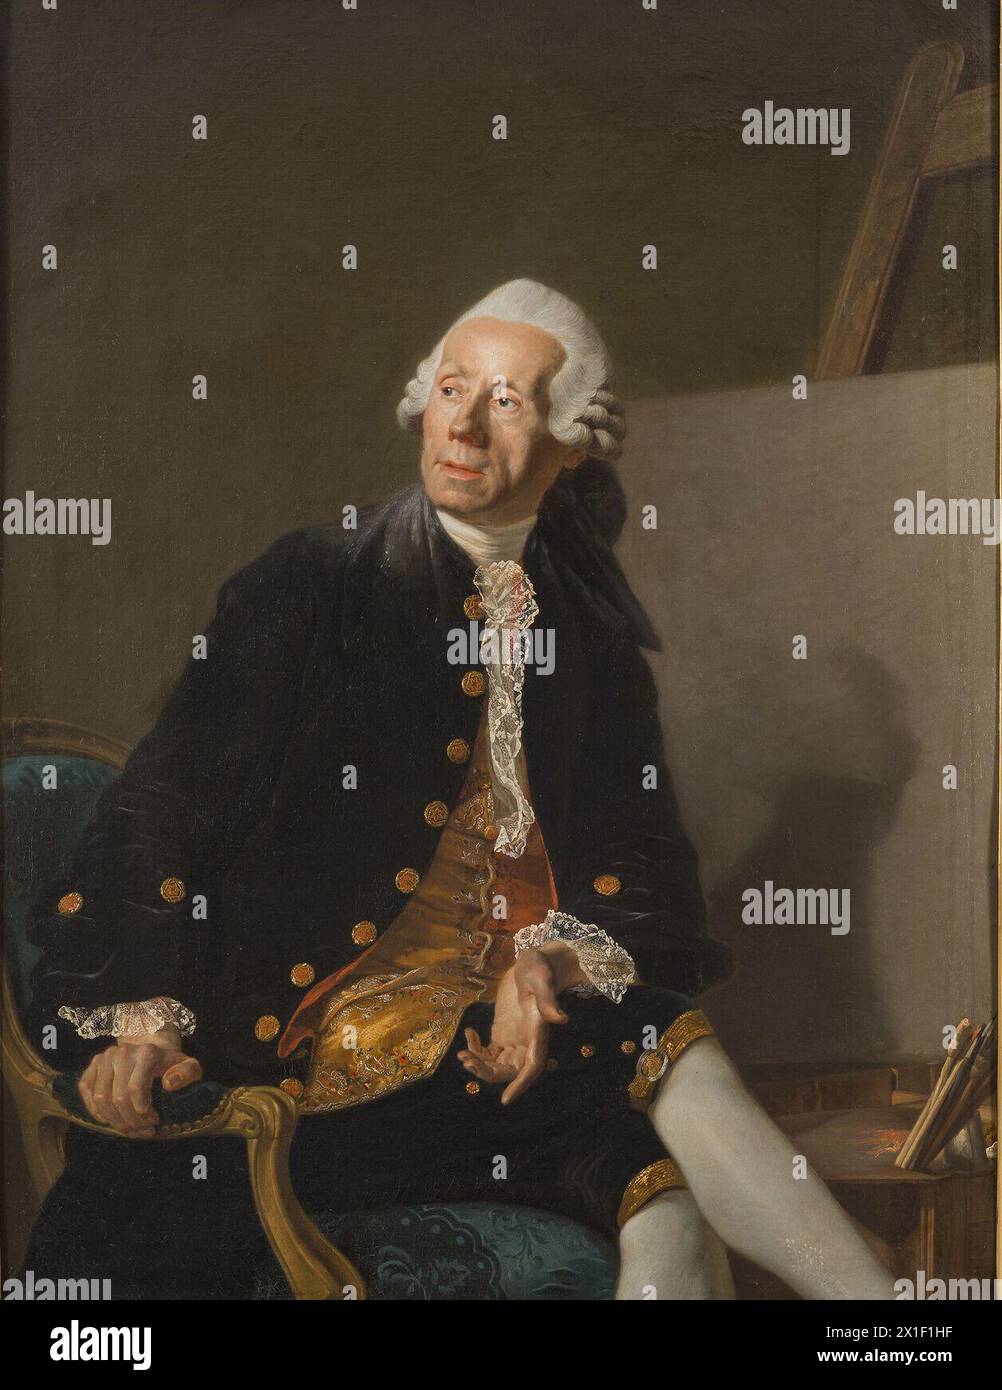 Ritratto di Étienne Aubry, c. 1775 Étienne Aubry Noël Hallé Foto Stock